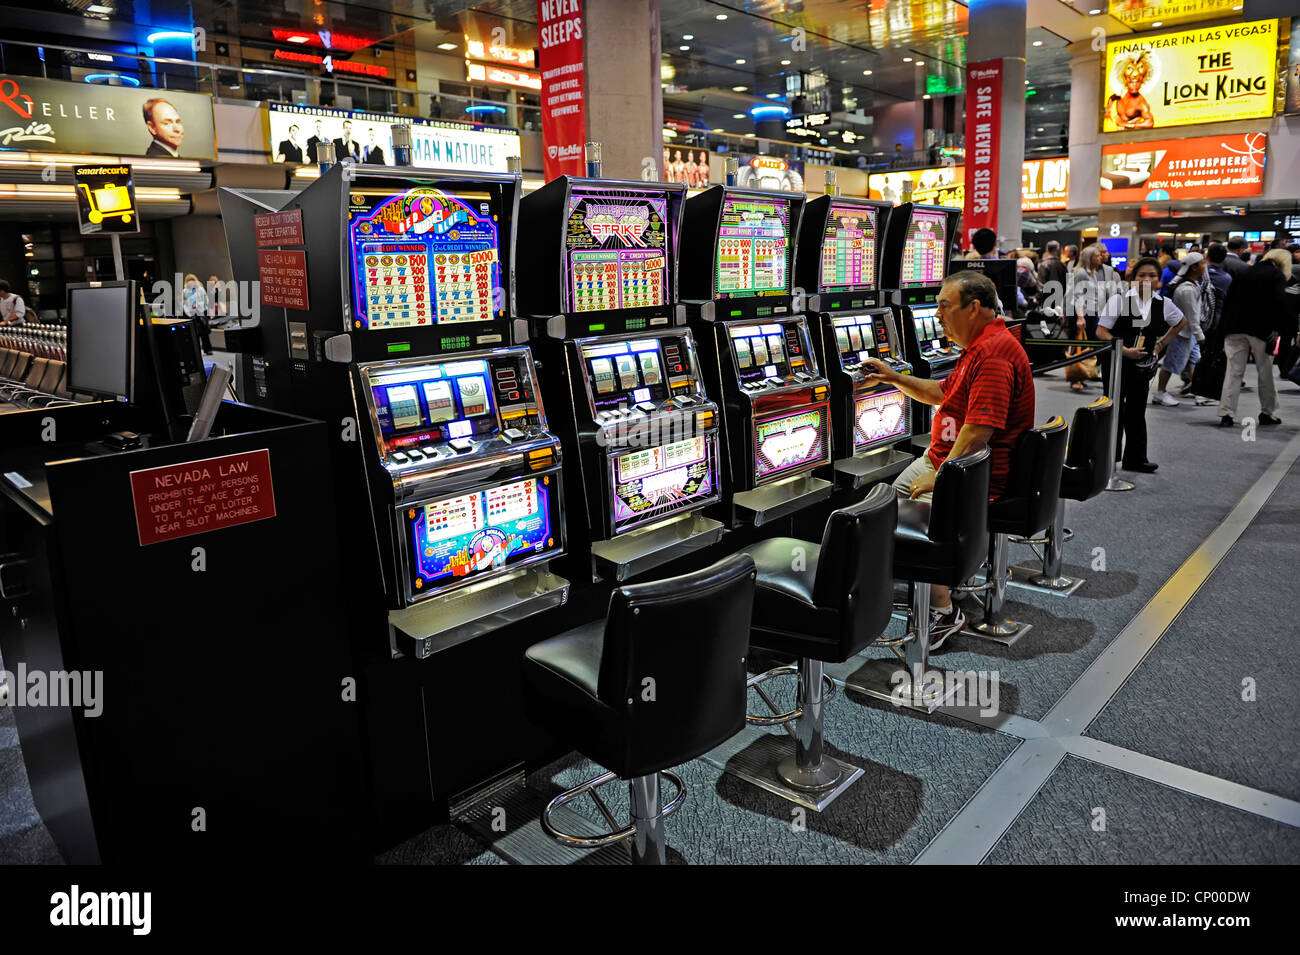 Las Vegas McCarran Airport Las Vegas Nevada Gambling Casino Stock Photo -  Alamy